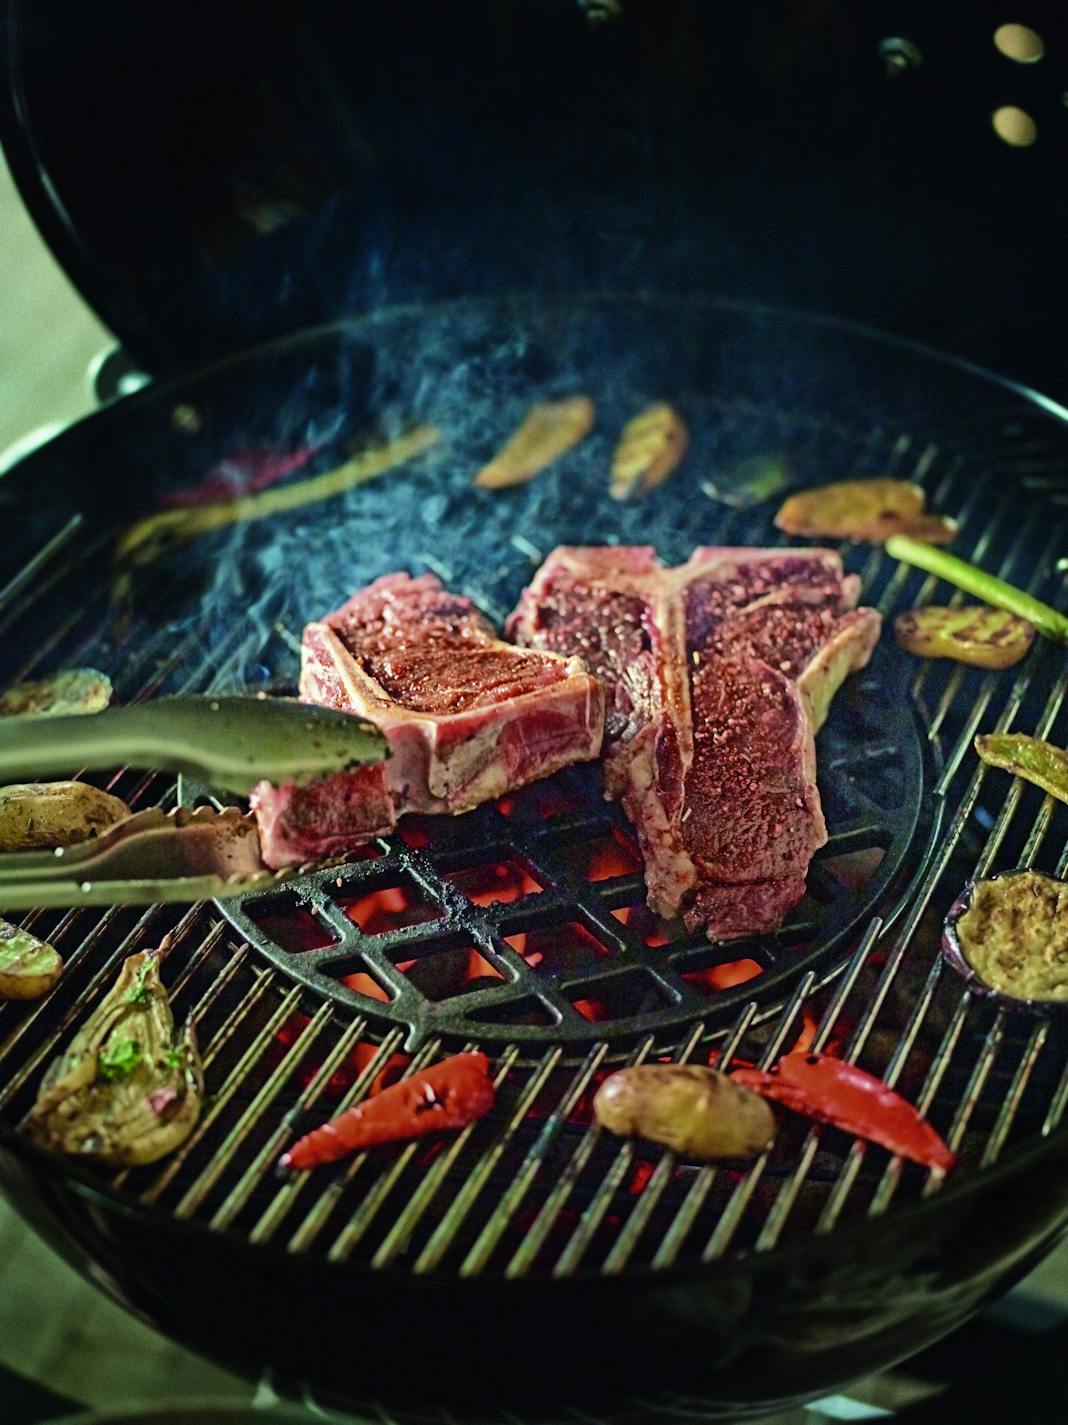 Steak gelingt es perfekt!